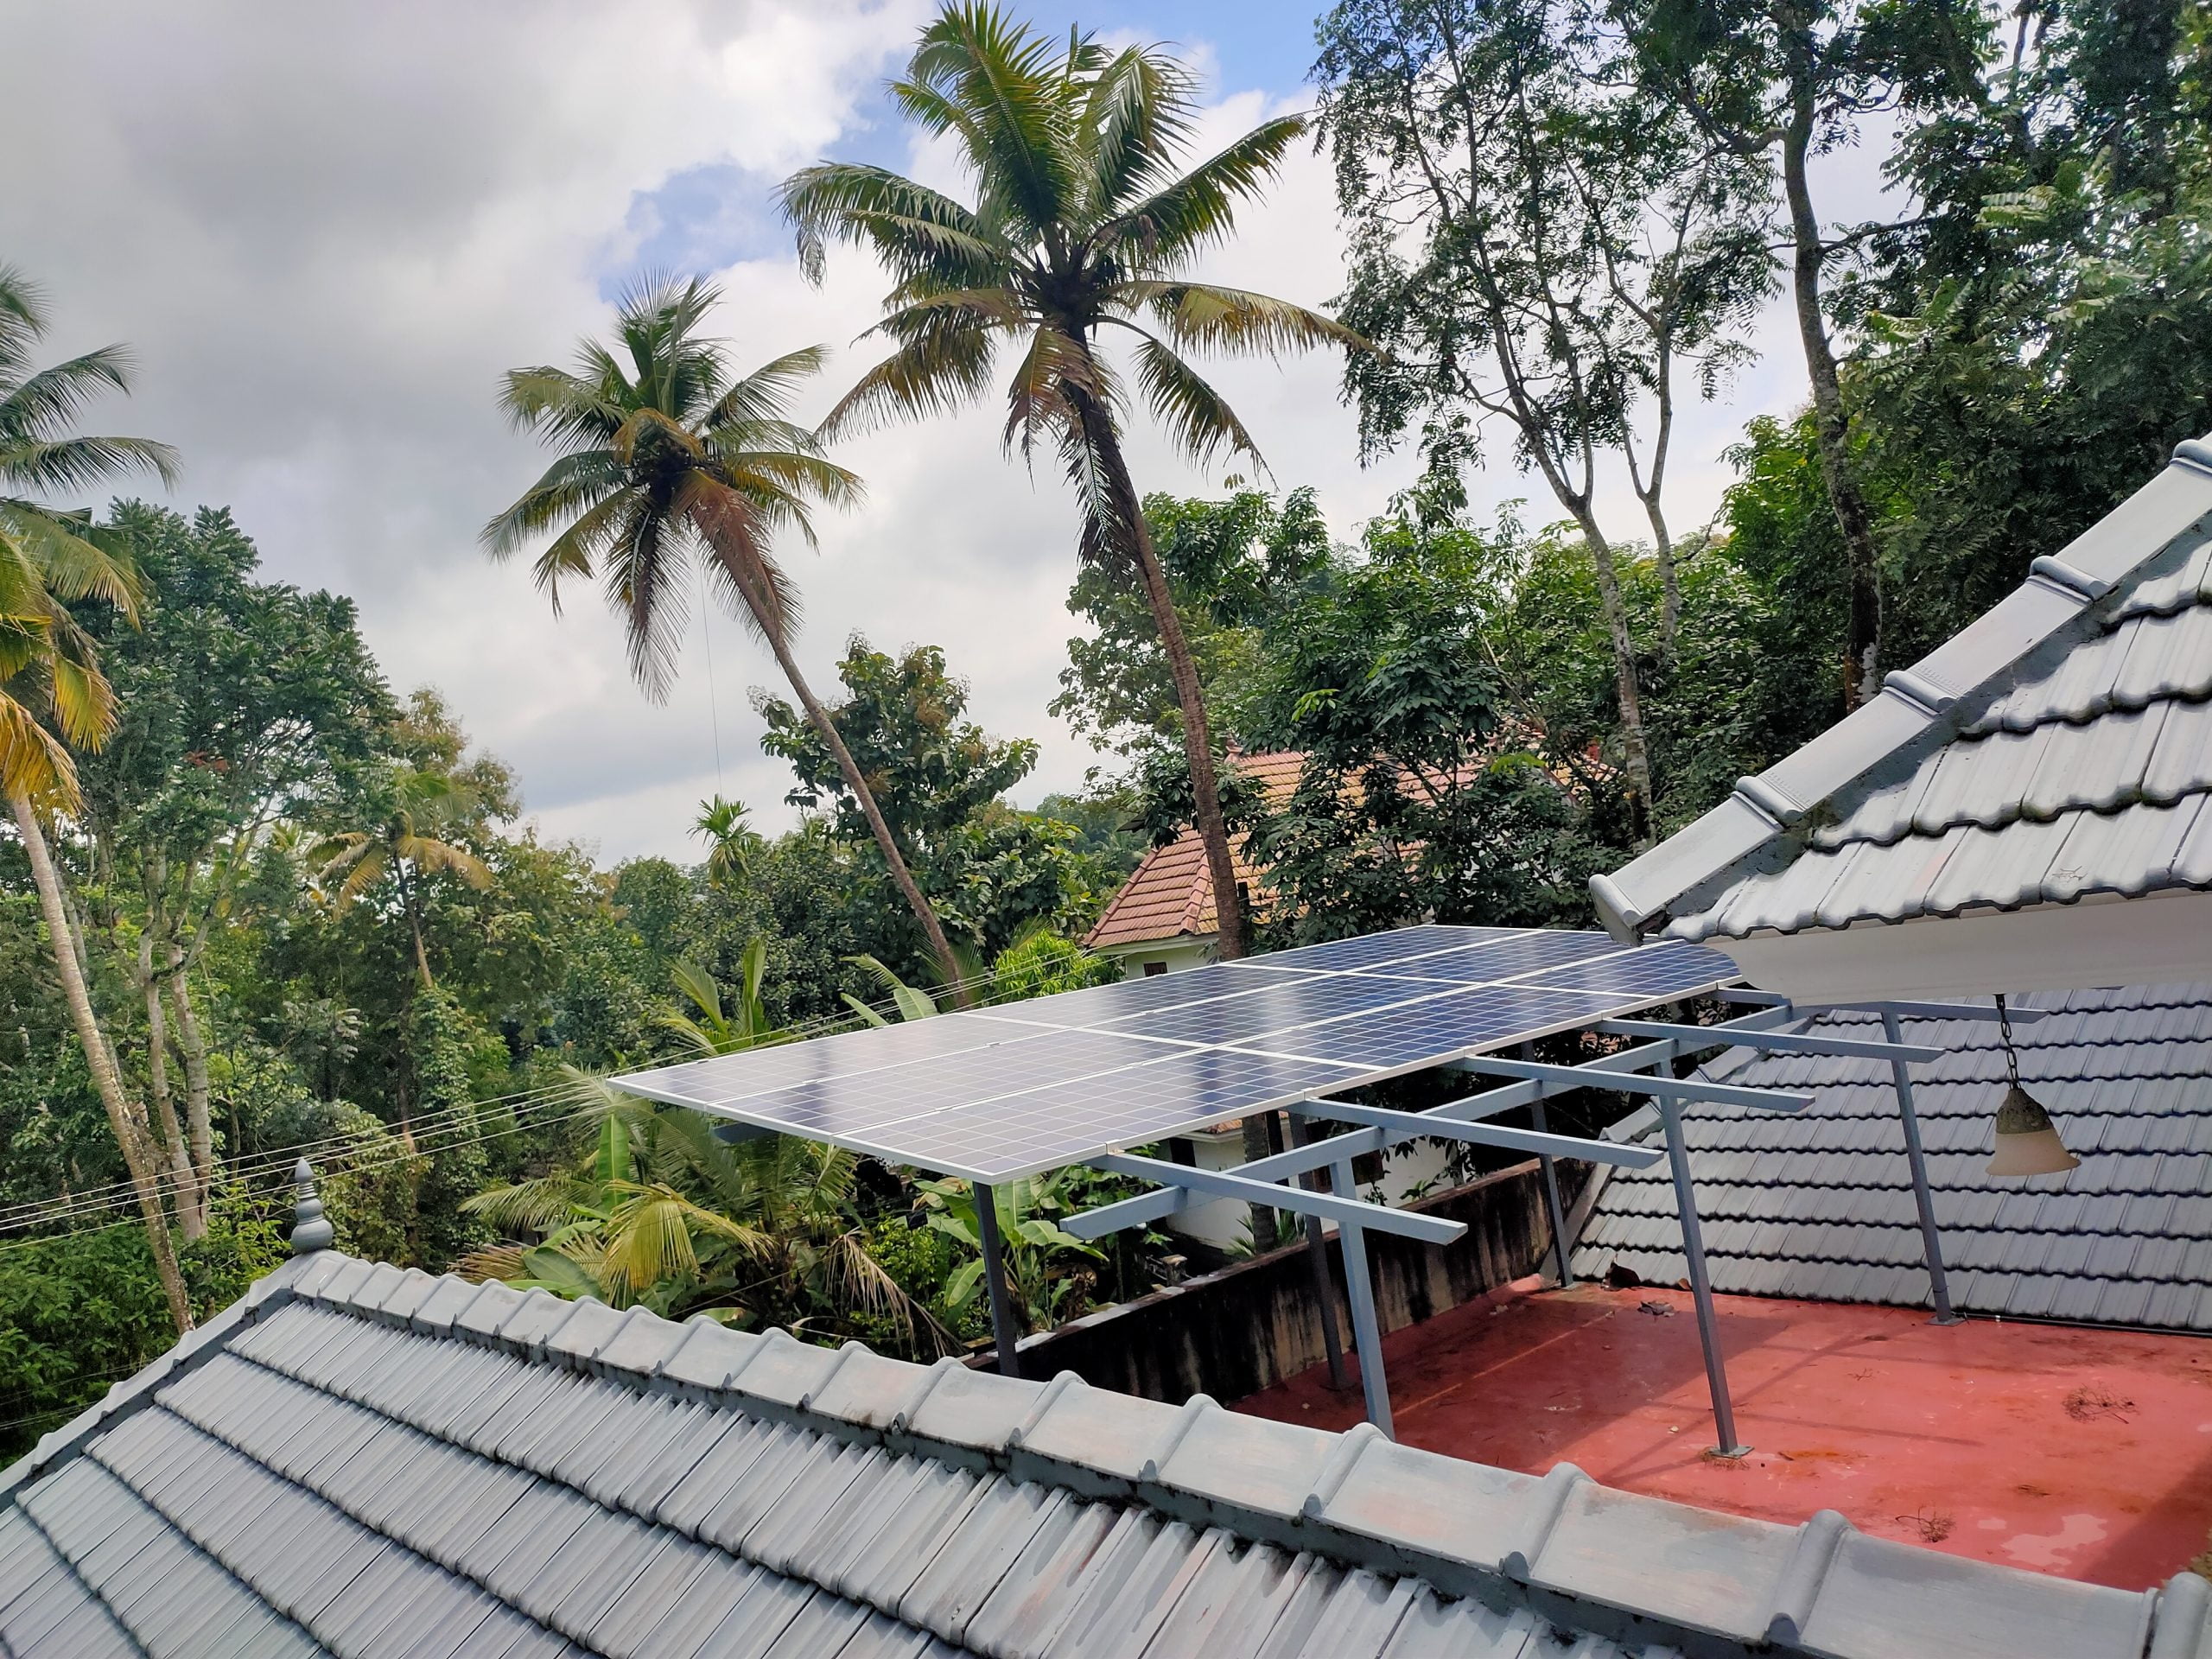 3 kW Solar Ongrid Power Plant at Kuruppanthara